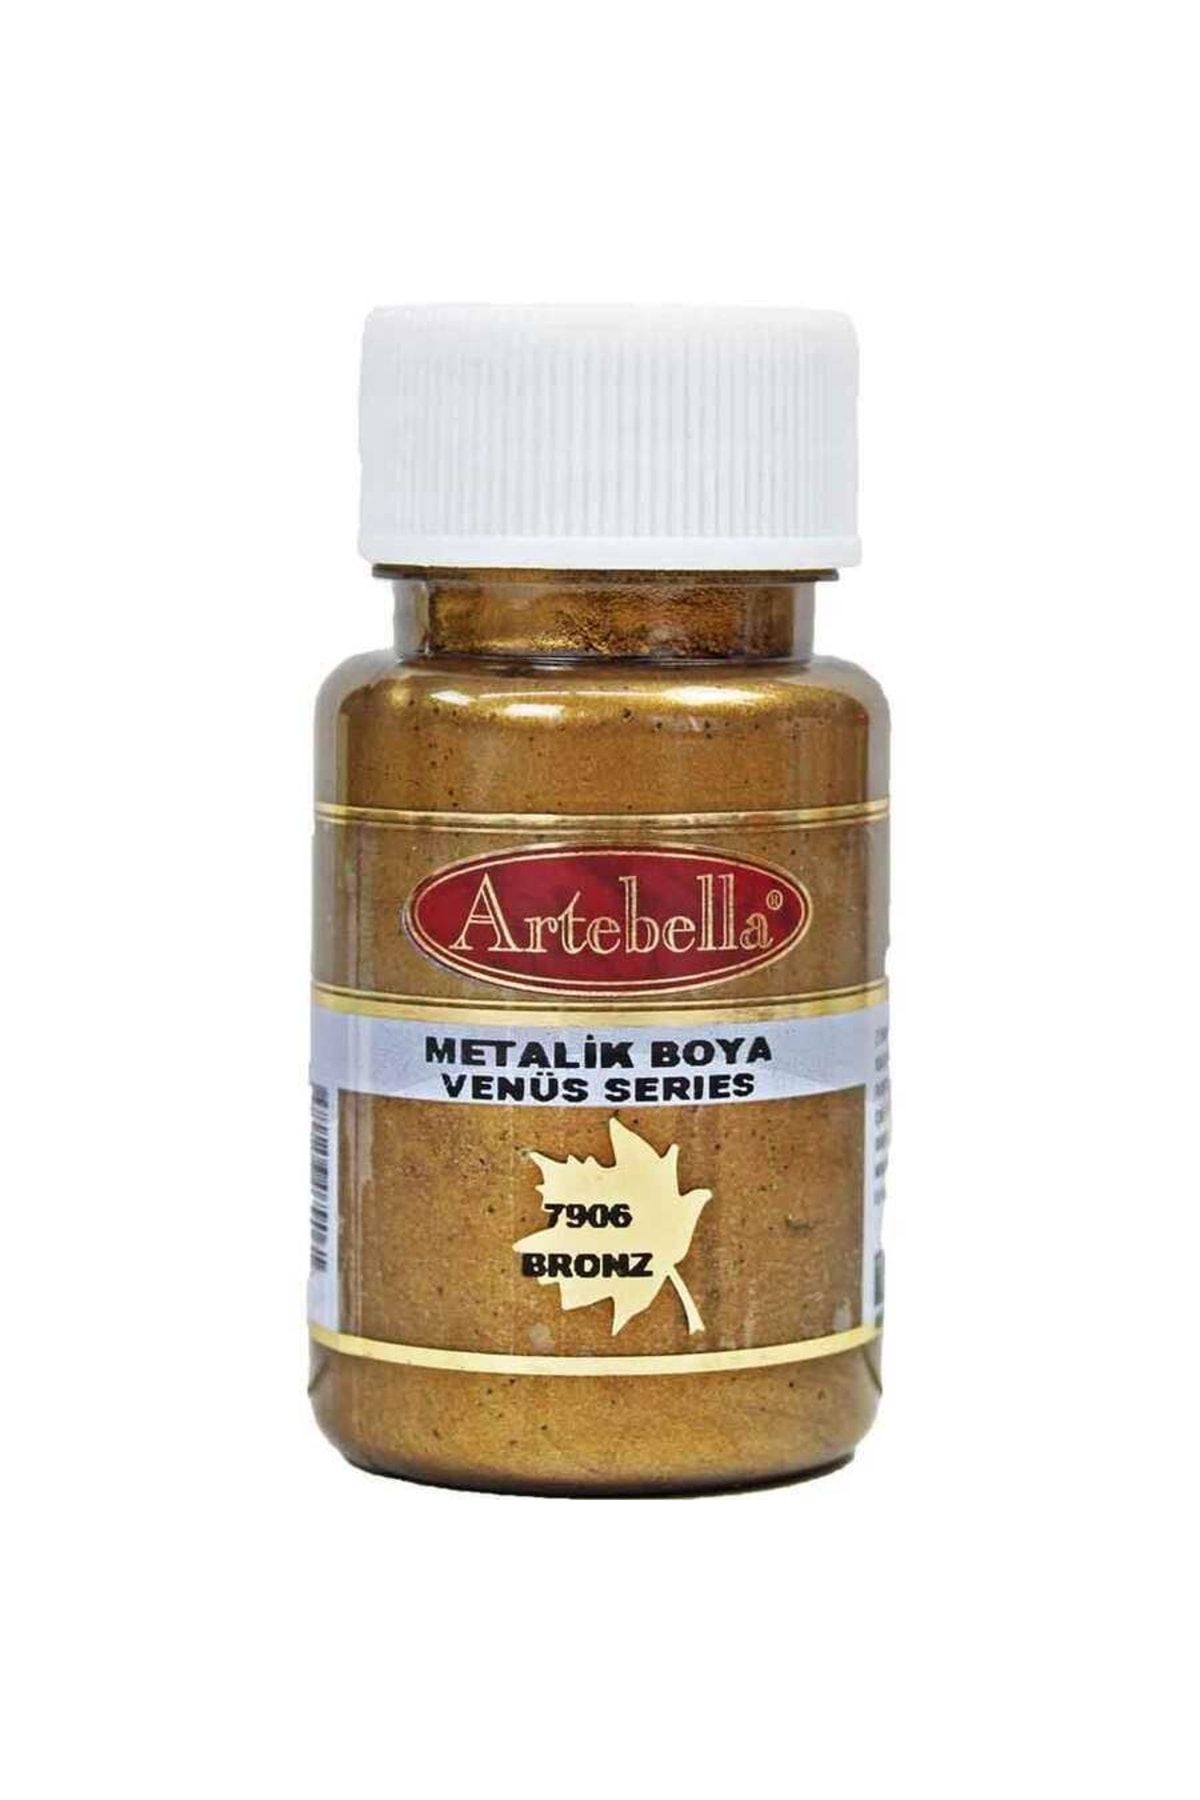 Artebella Venüs Serisi Metalik Boya 790650 Bronz 50 Ml